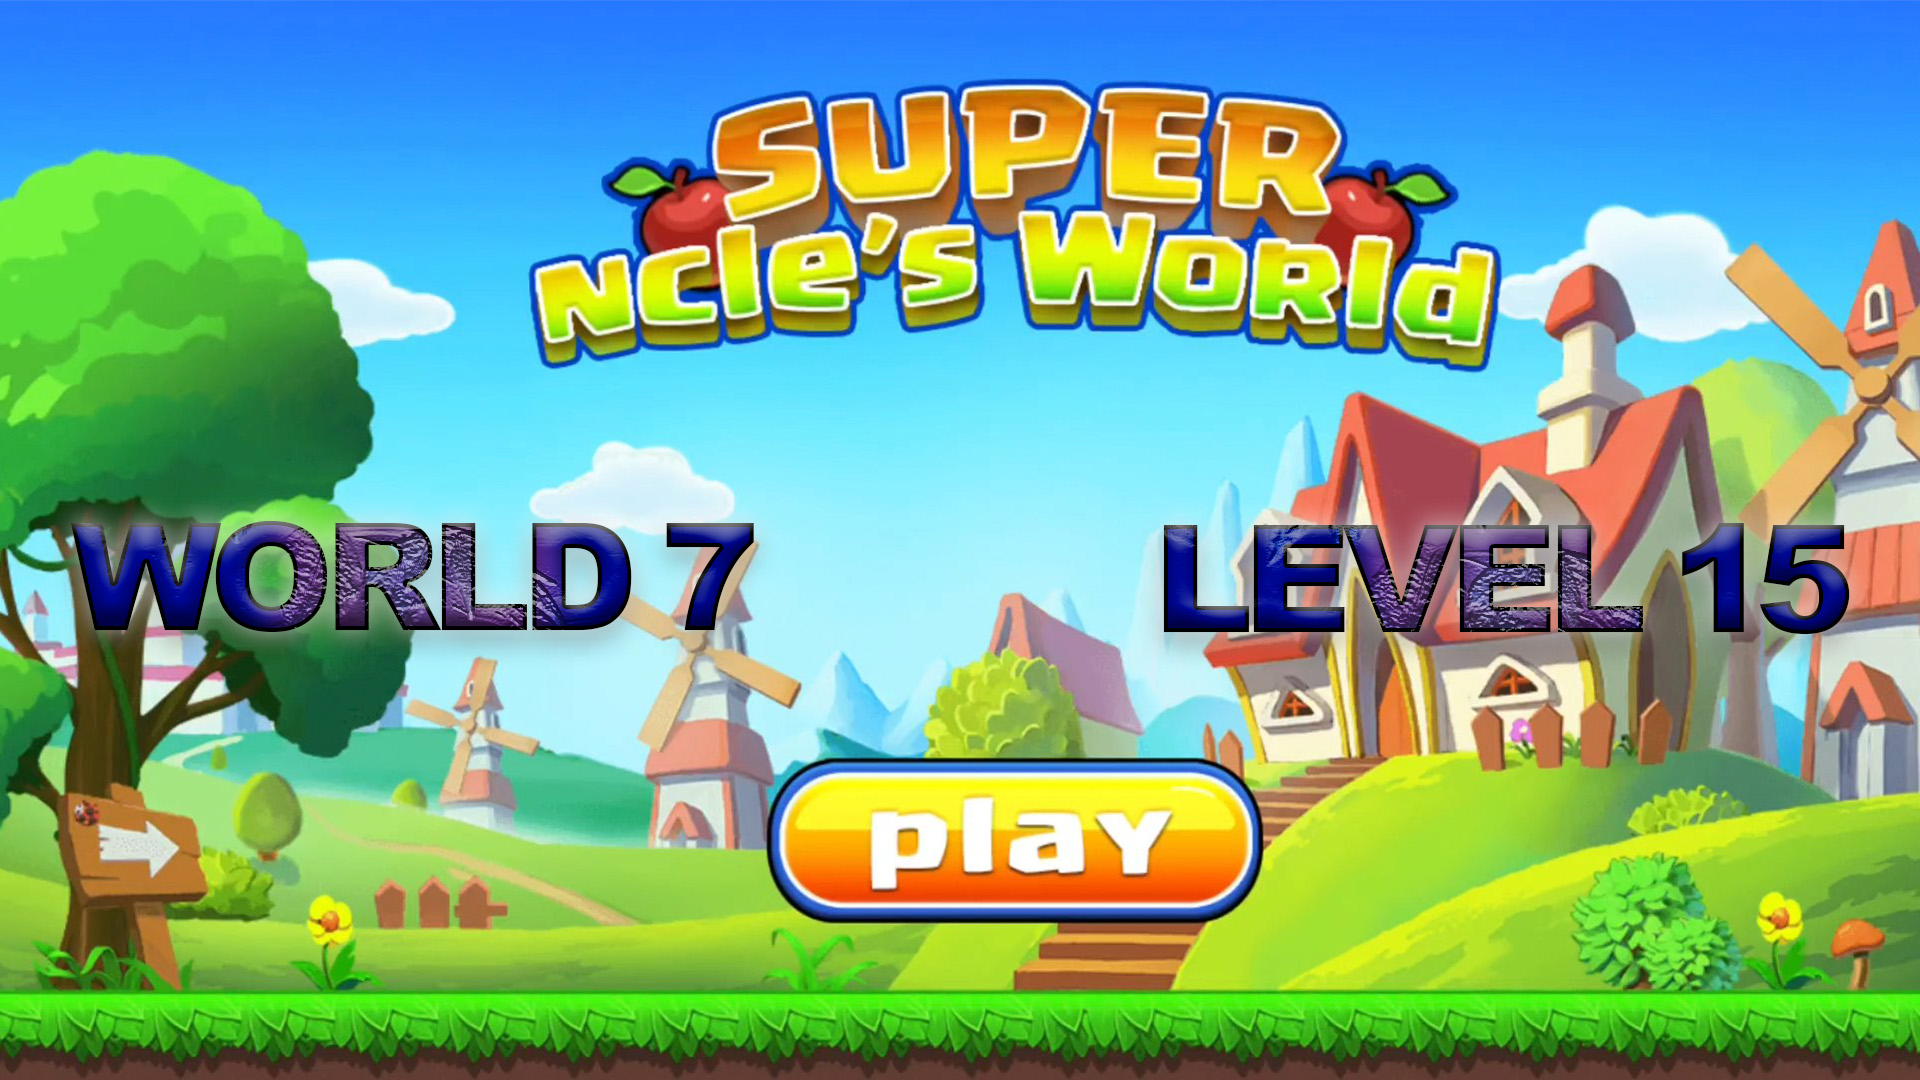 Super ncle's  World 7. Level 15.